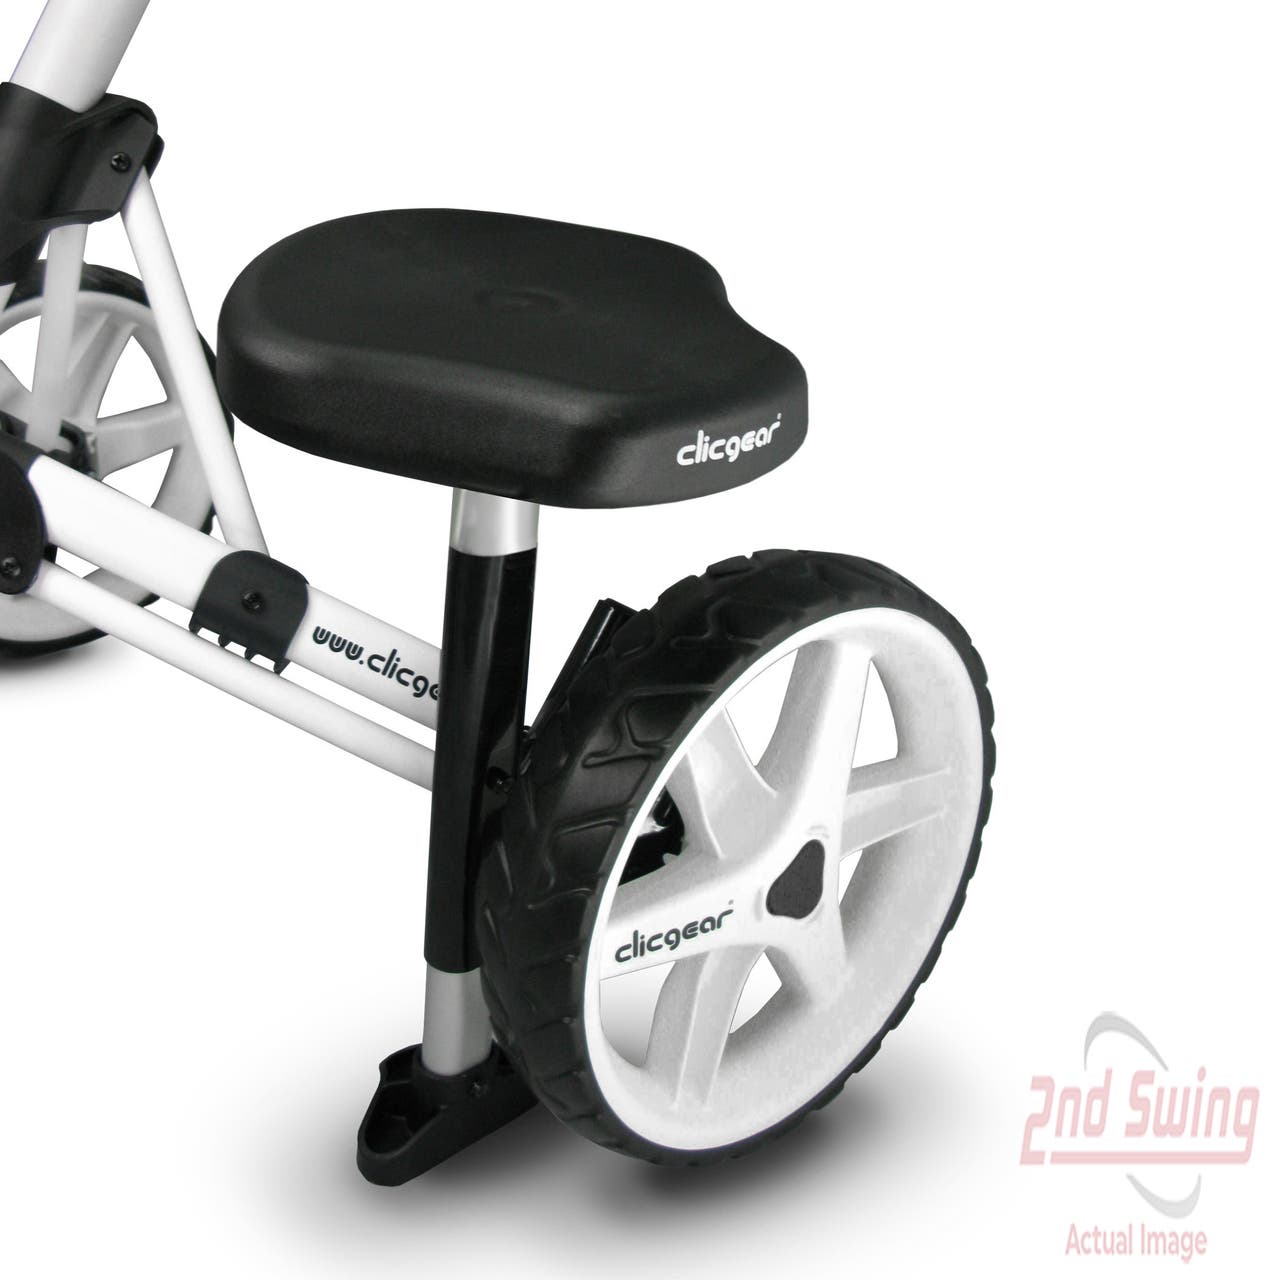 Clicgear Push Cart Seat Accessories